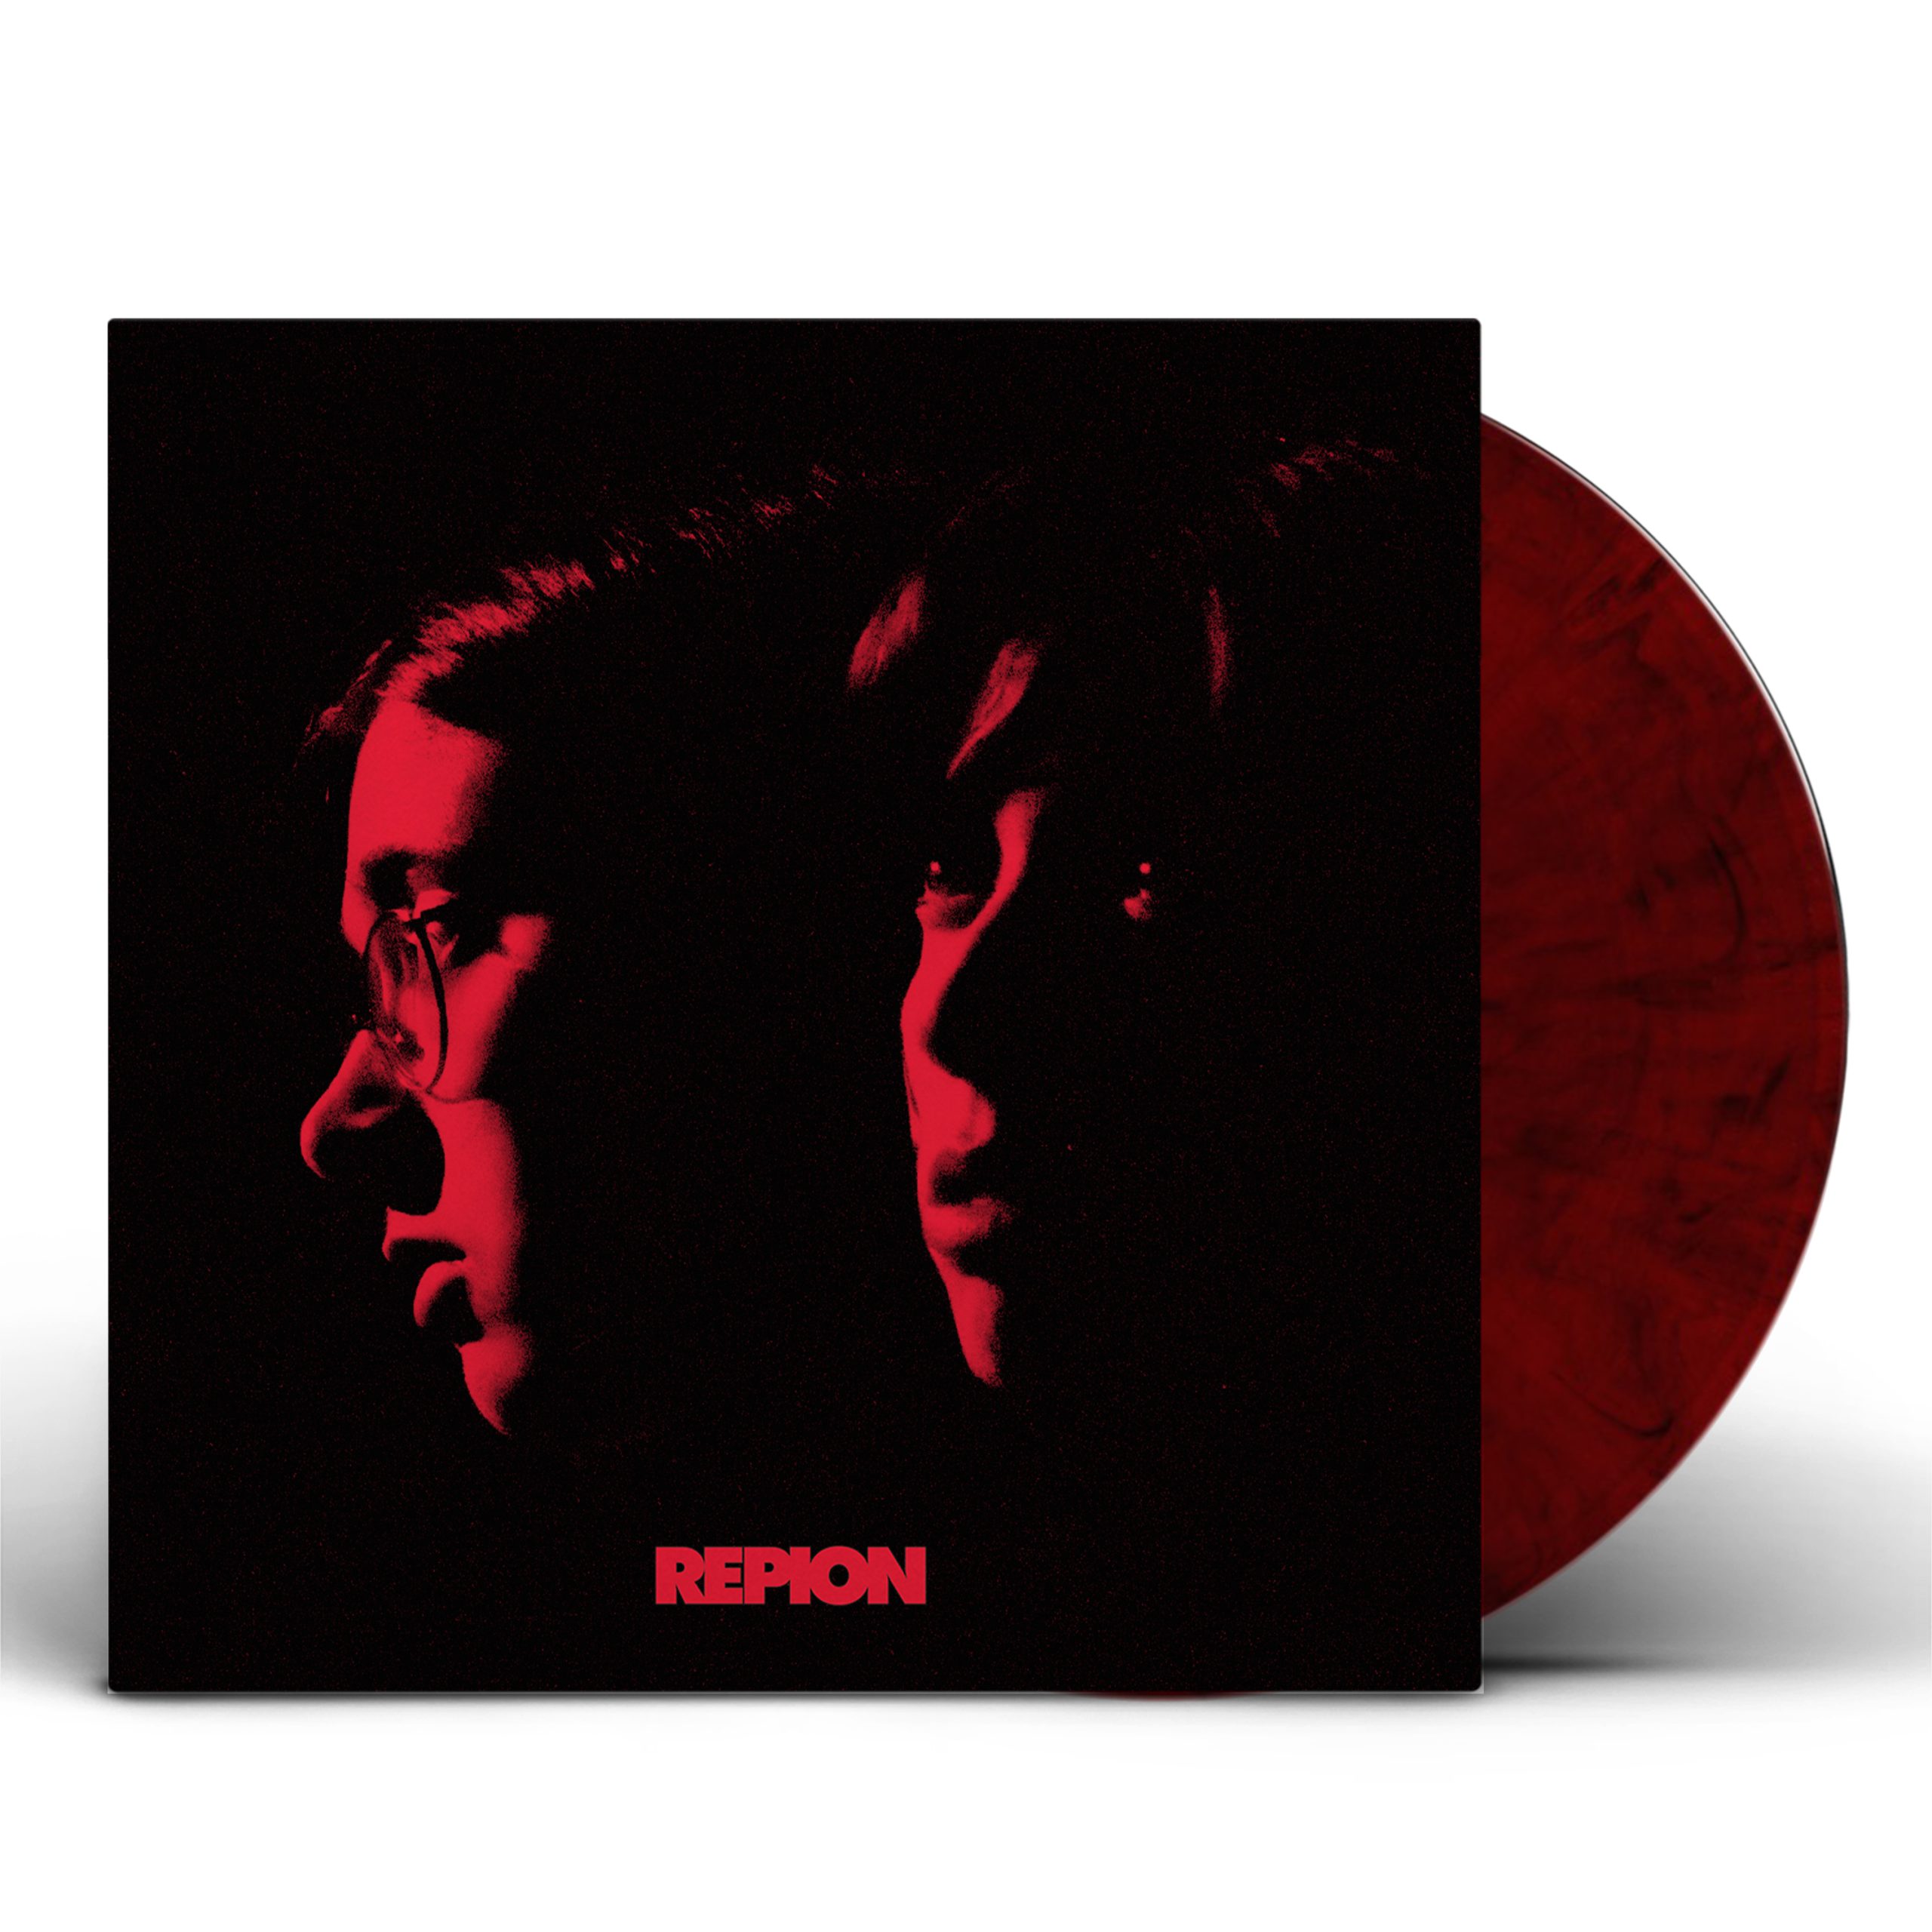 Repion "Repion" LP Limitada